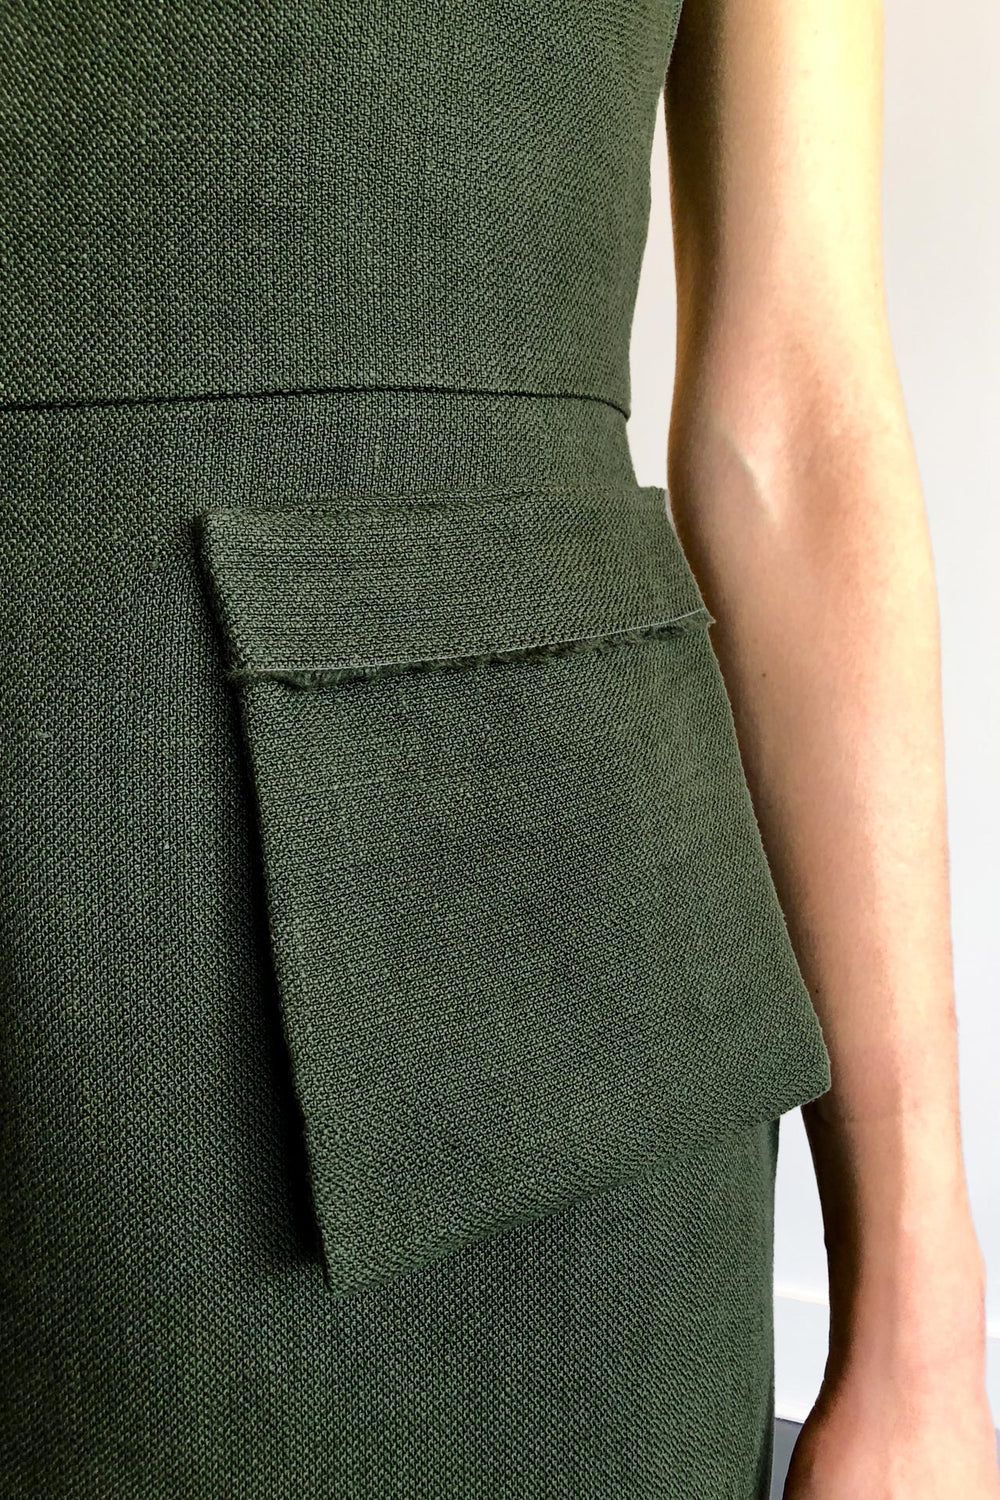 Fashion Designer CARL KAPP collection | Boulder Linen dress Green | Sydney Australia